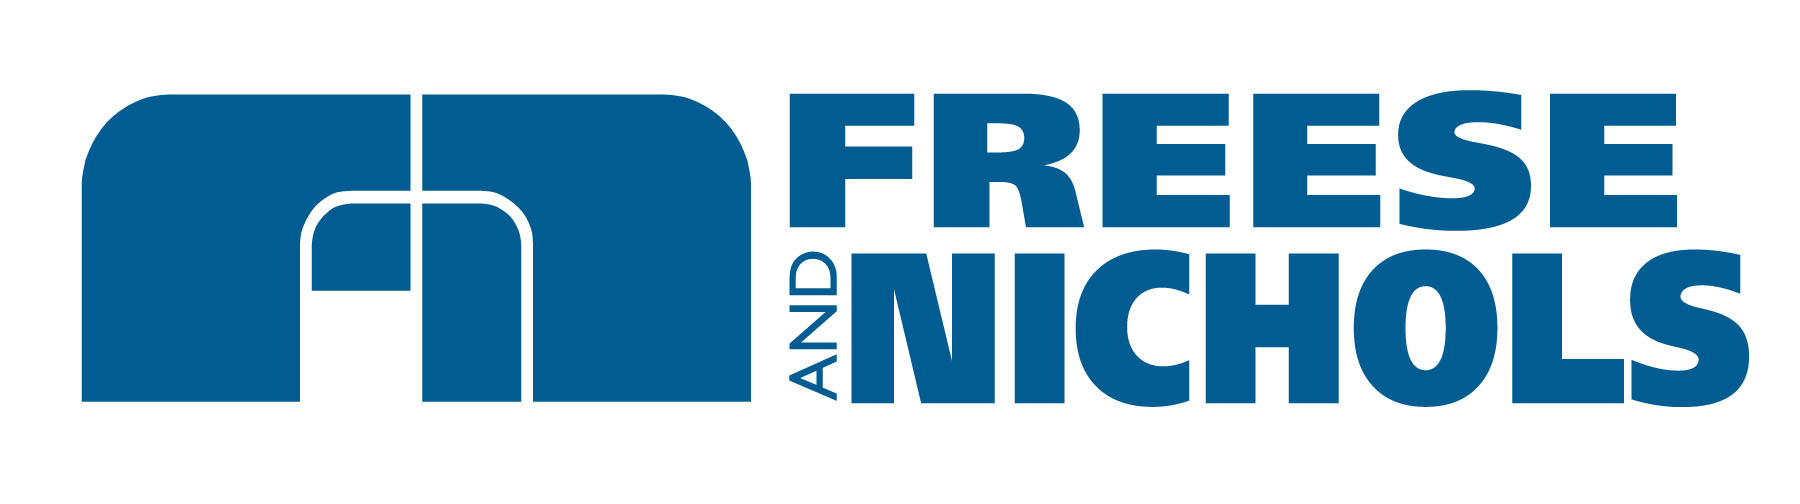 Freese and Nichols, Inc.